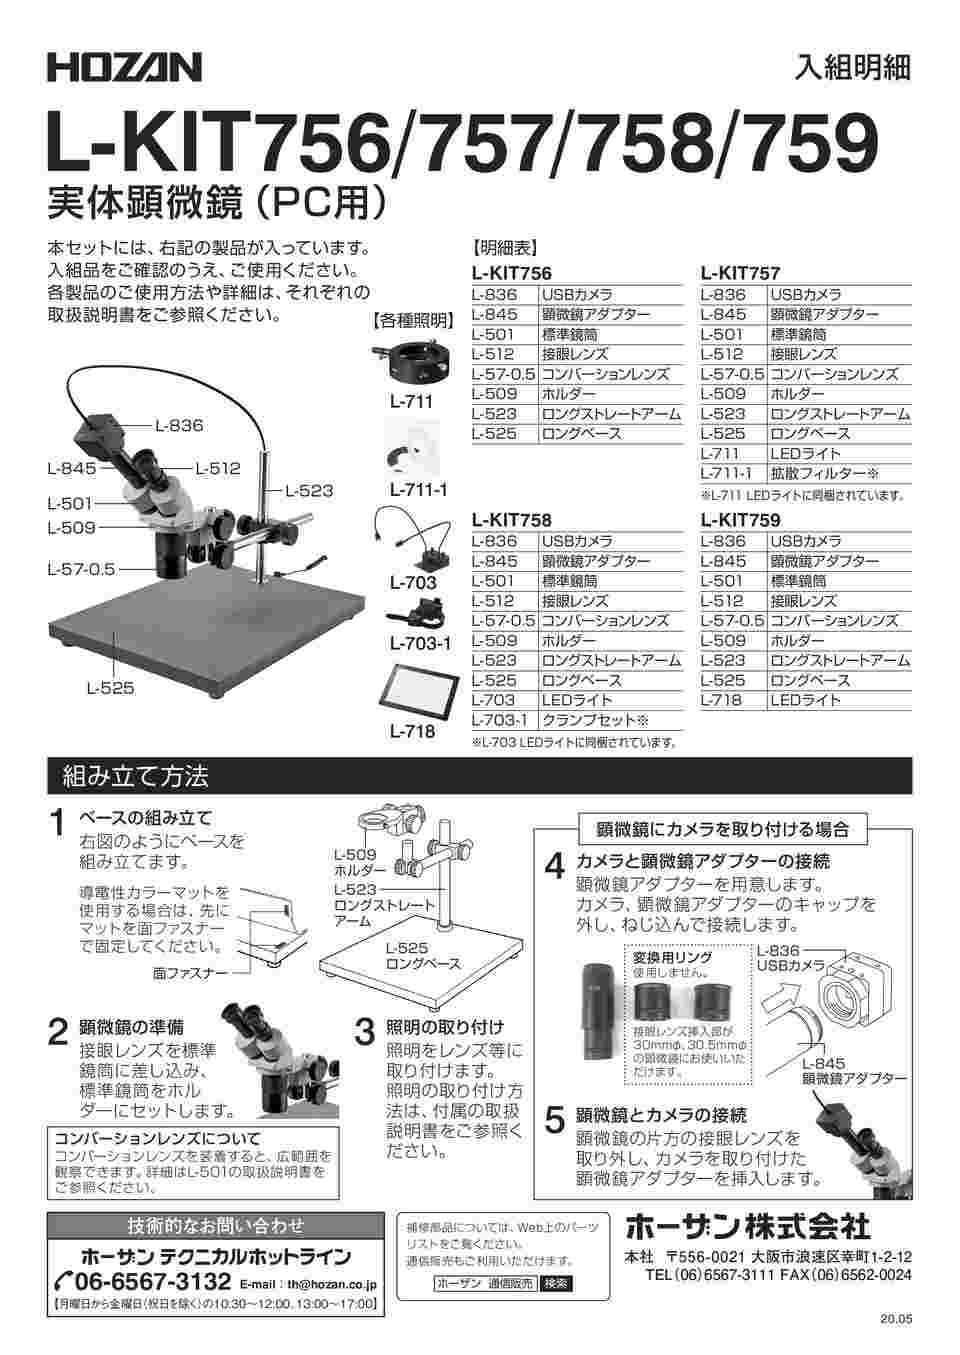 日本最級 ホーザン HOZAN 実体顕微鏡 PC用 L-KIT758 1台